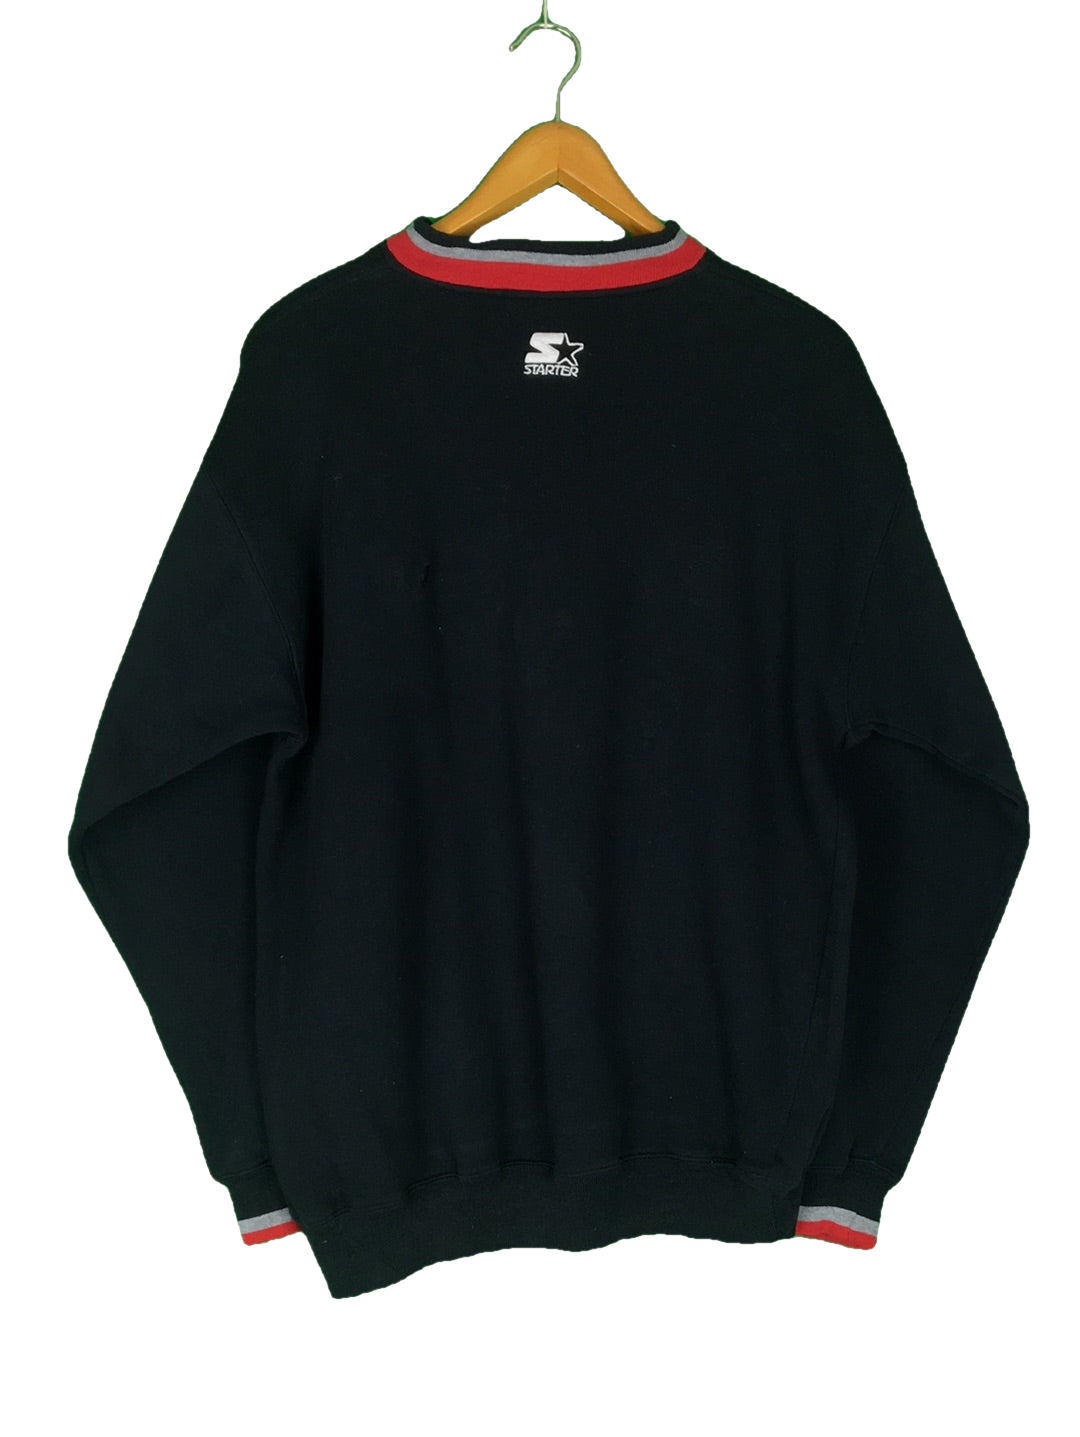 Starter "Chicago Bulls" Sweater (XL)